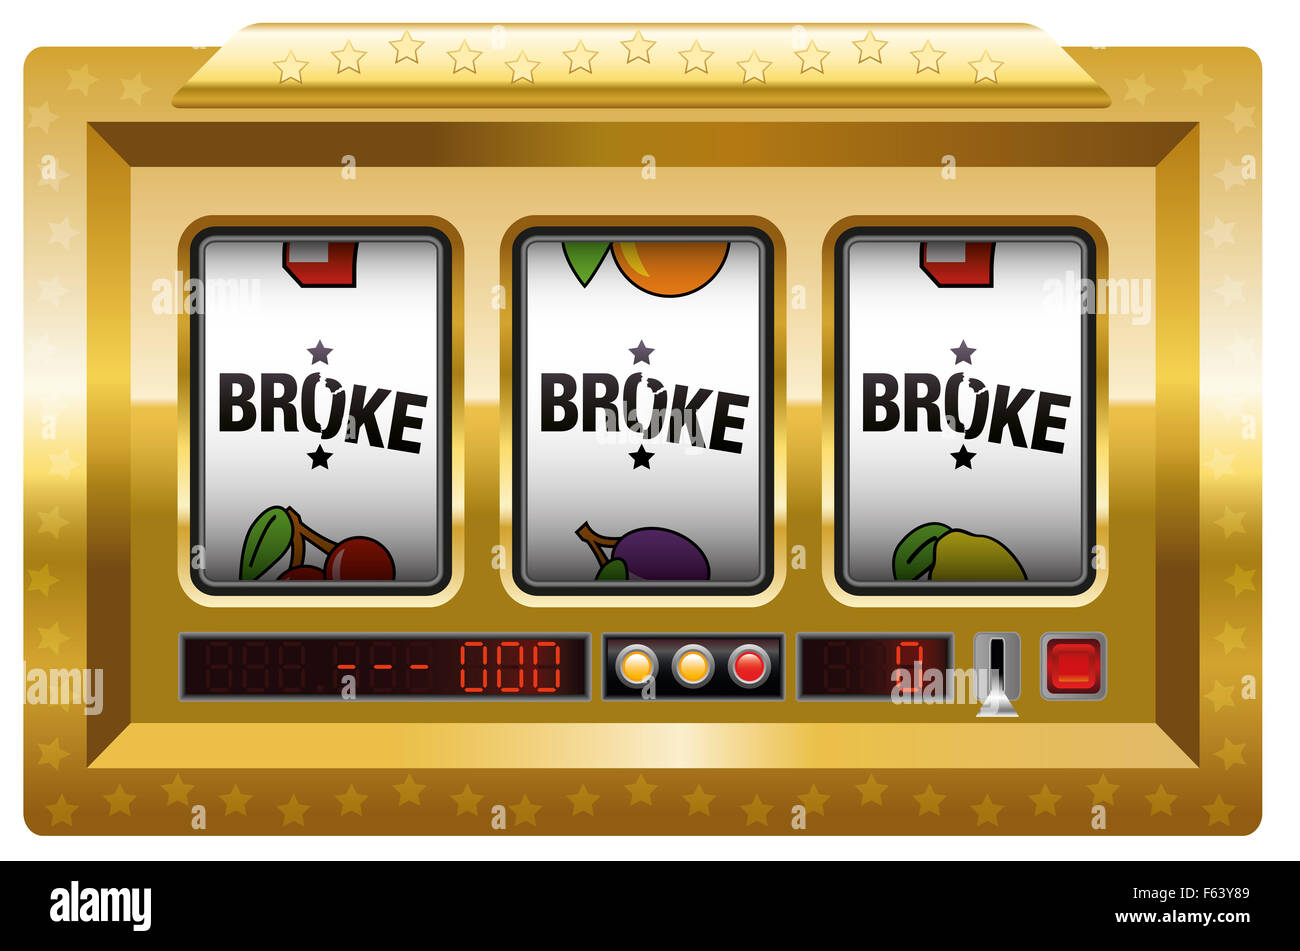 Broke - slot machine with three reels lettering BROKE. Illustration on white background. Stock Photo